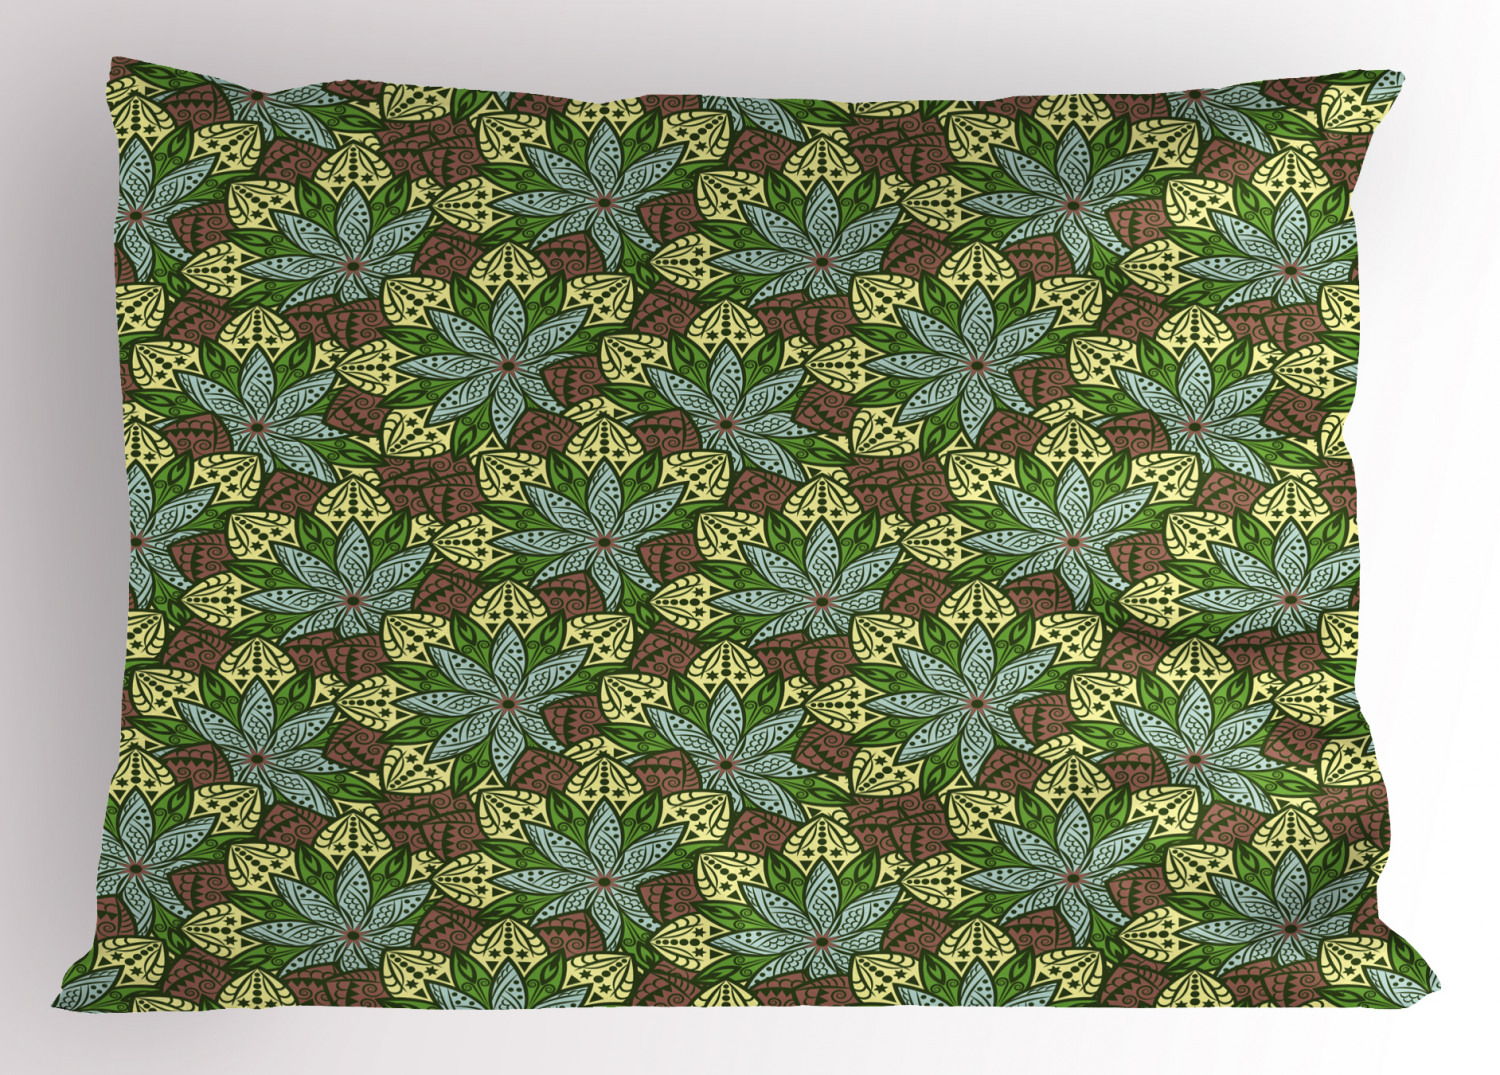 Details about   Colorful Botany Pillow Sham Decorative Pillowcase 3 Sizes Bedroom Decoration 